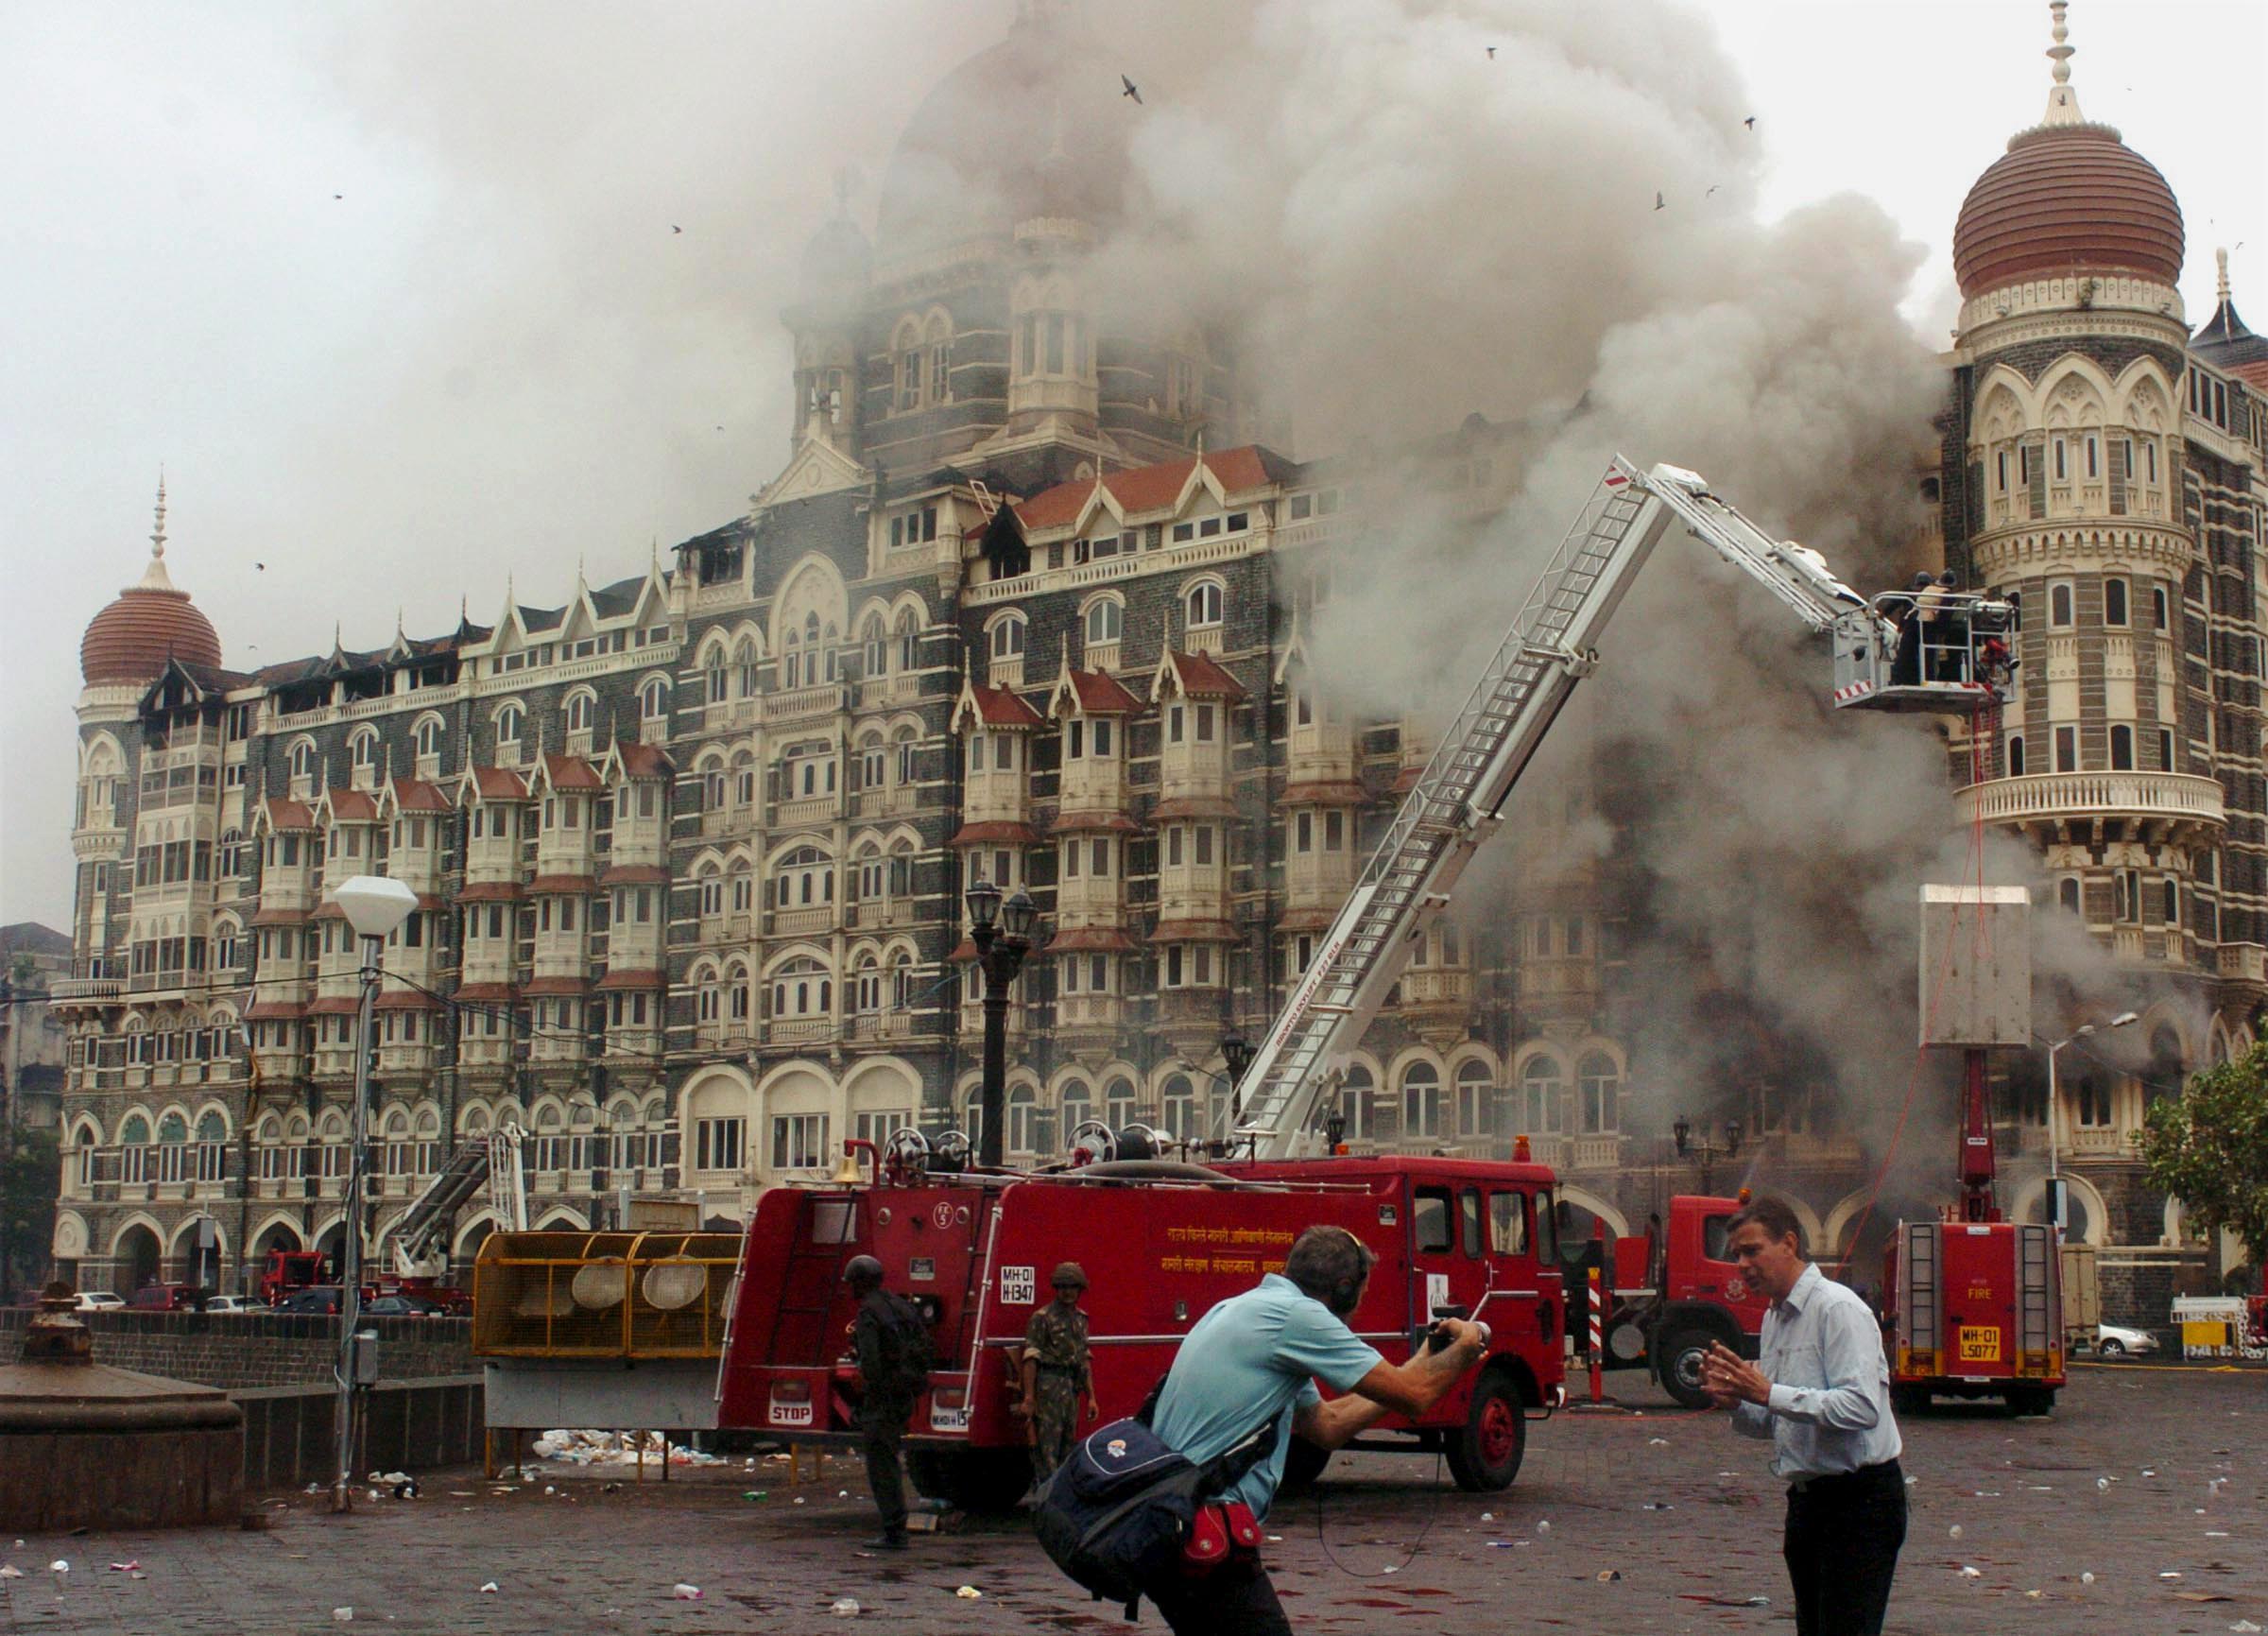 Нападение на мумбаи. Теракт в Индии 2008 Тадж Махал. Мумбаи 2008 Тадж Махал теракт. Отель Мумбаи теракт 2008. Отель Тадж Махал 2008 теракт.